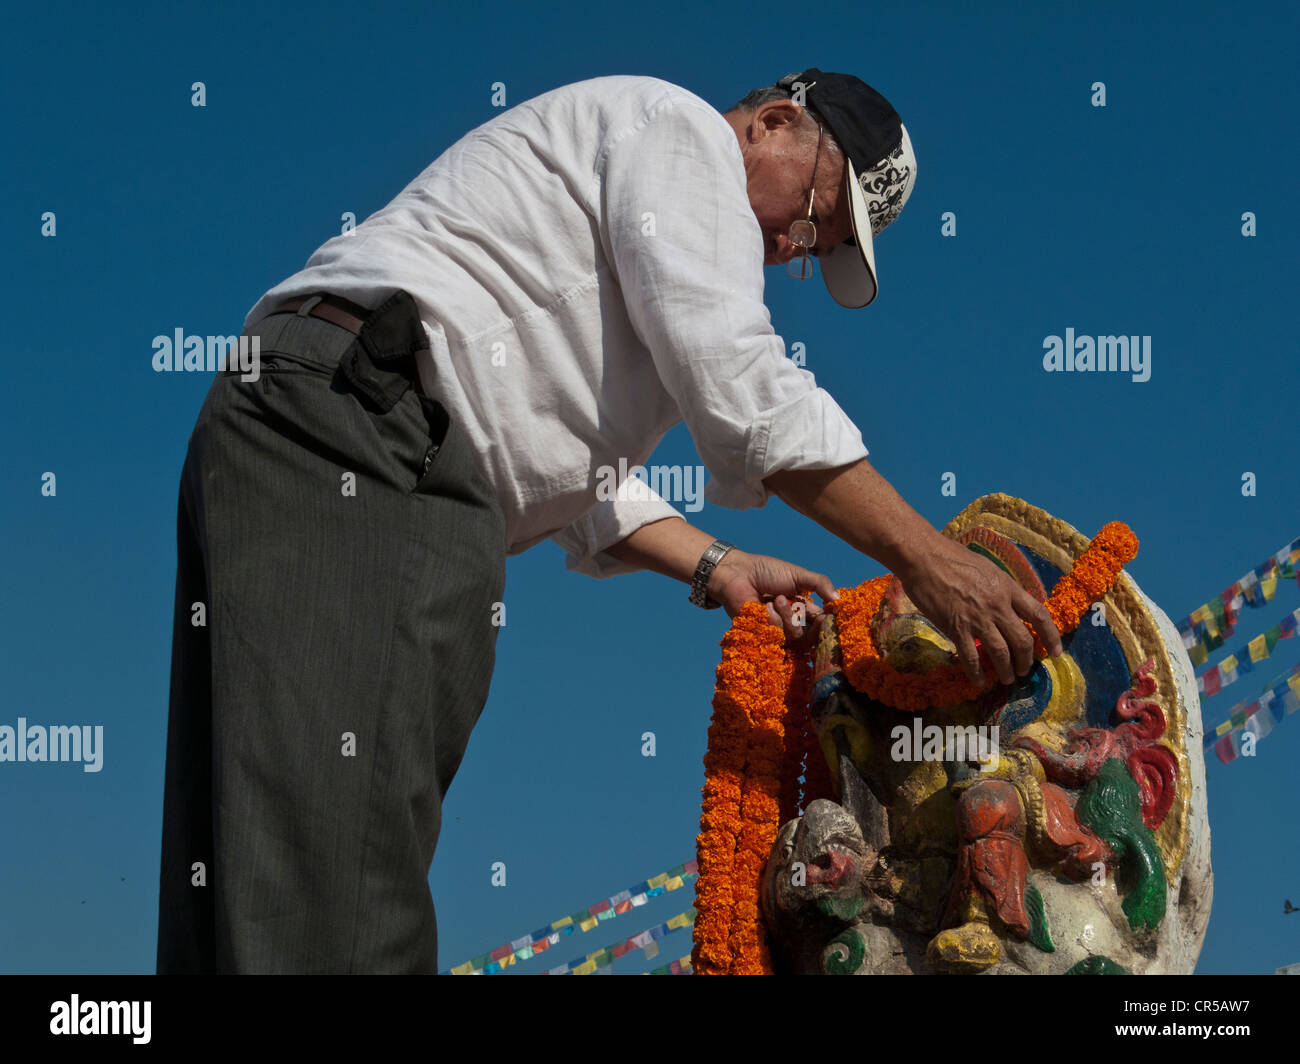 Uomo locale che offre una ghirlanda di fiori in un'immagine di una dea, Boudnath, Kathmandu, Nepal, Sud Asia Foto Stock